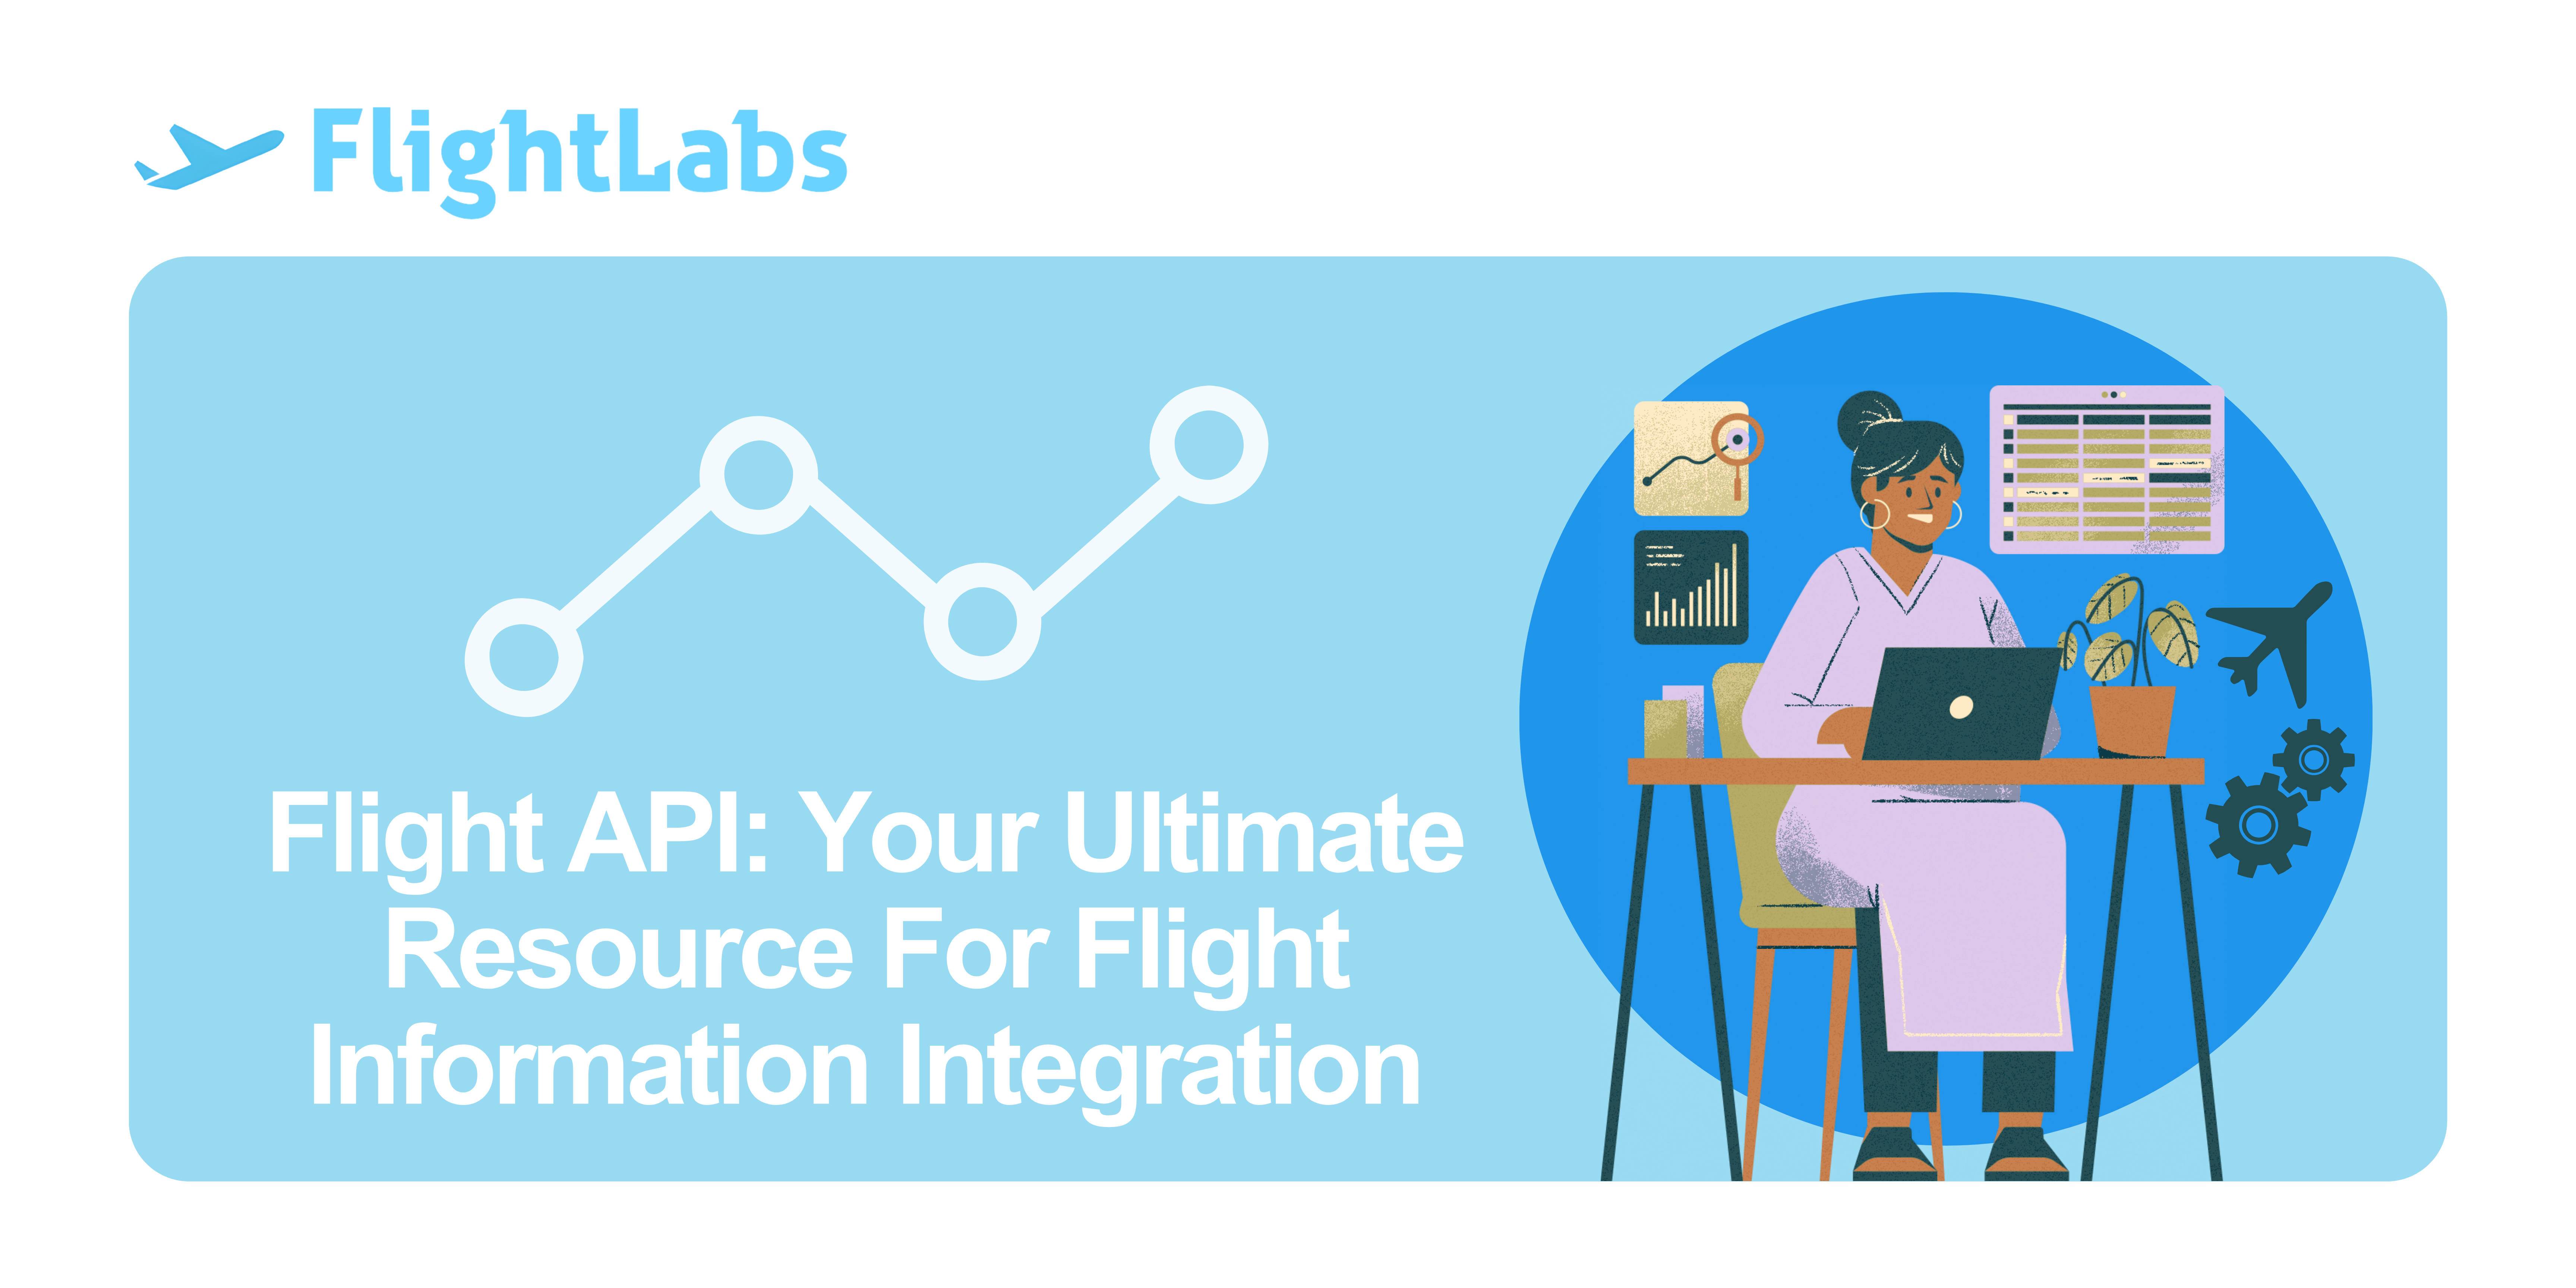 Flight API: Your Ultimate Resource For Flight Information Integration